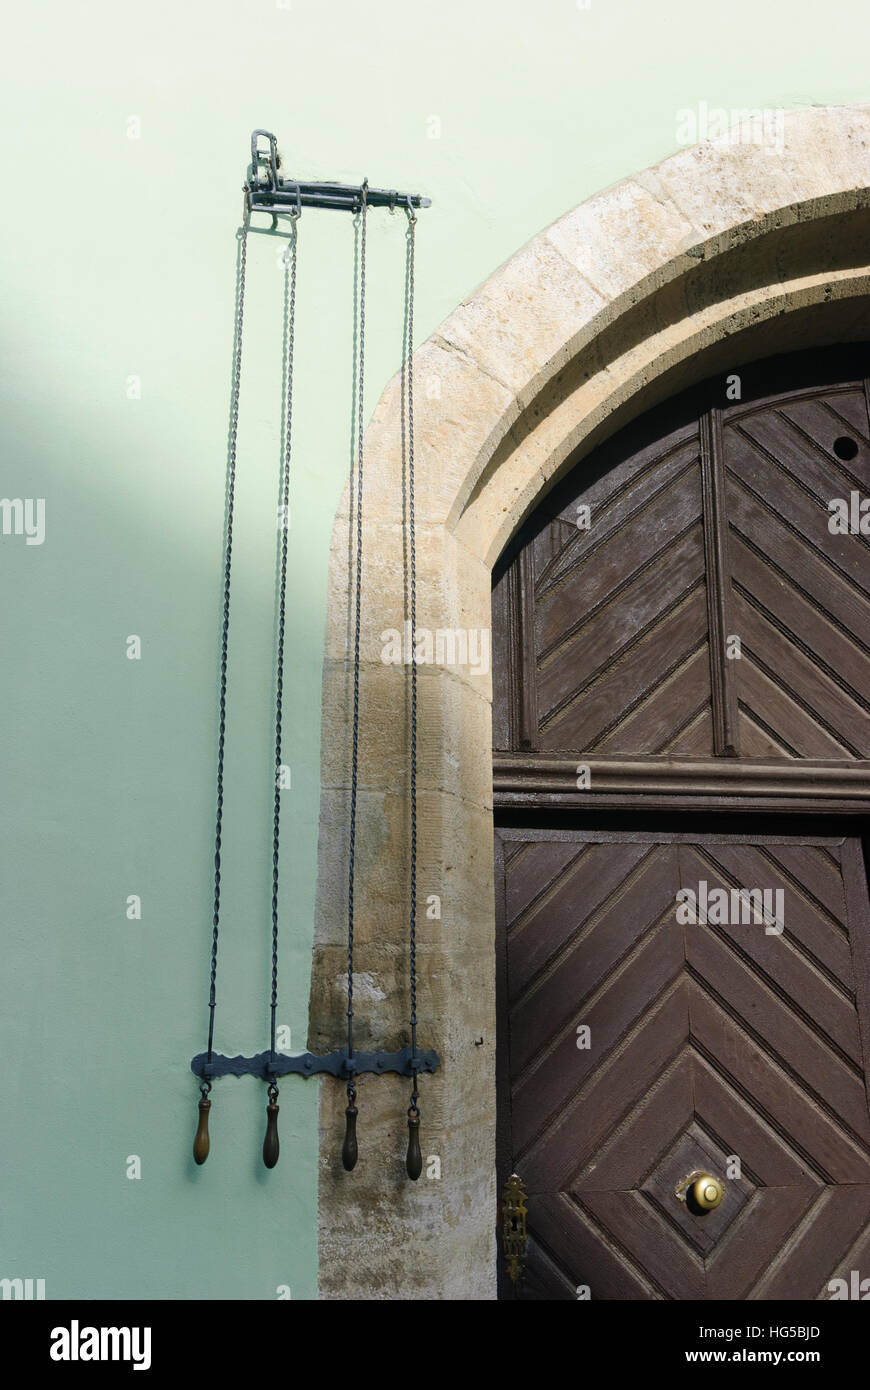 Timbres de puerta fotografías e imágenes de alta resolución - Alamy